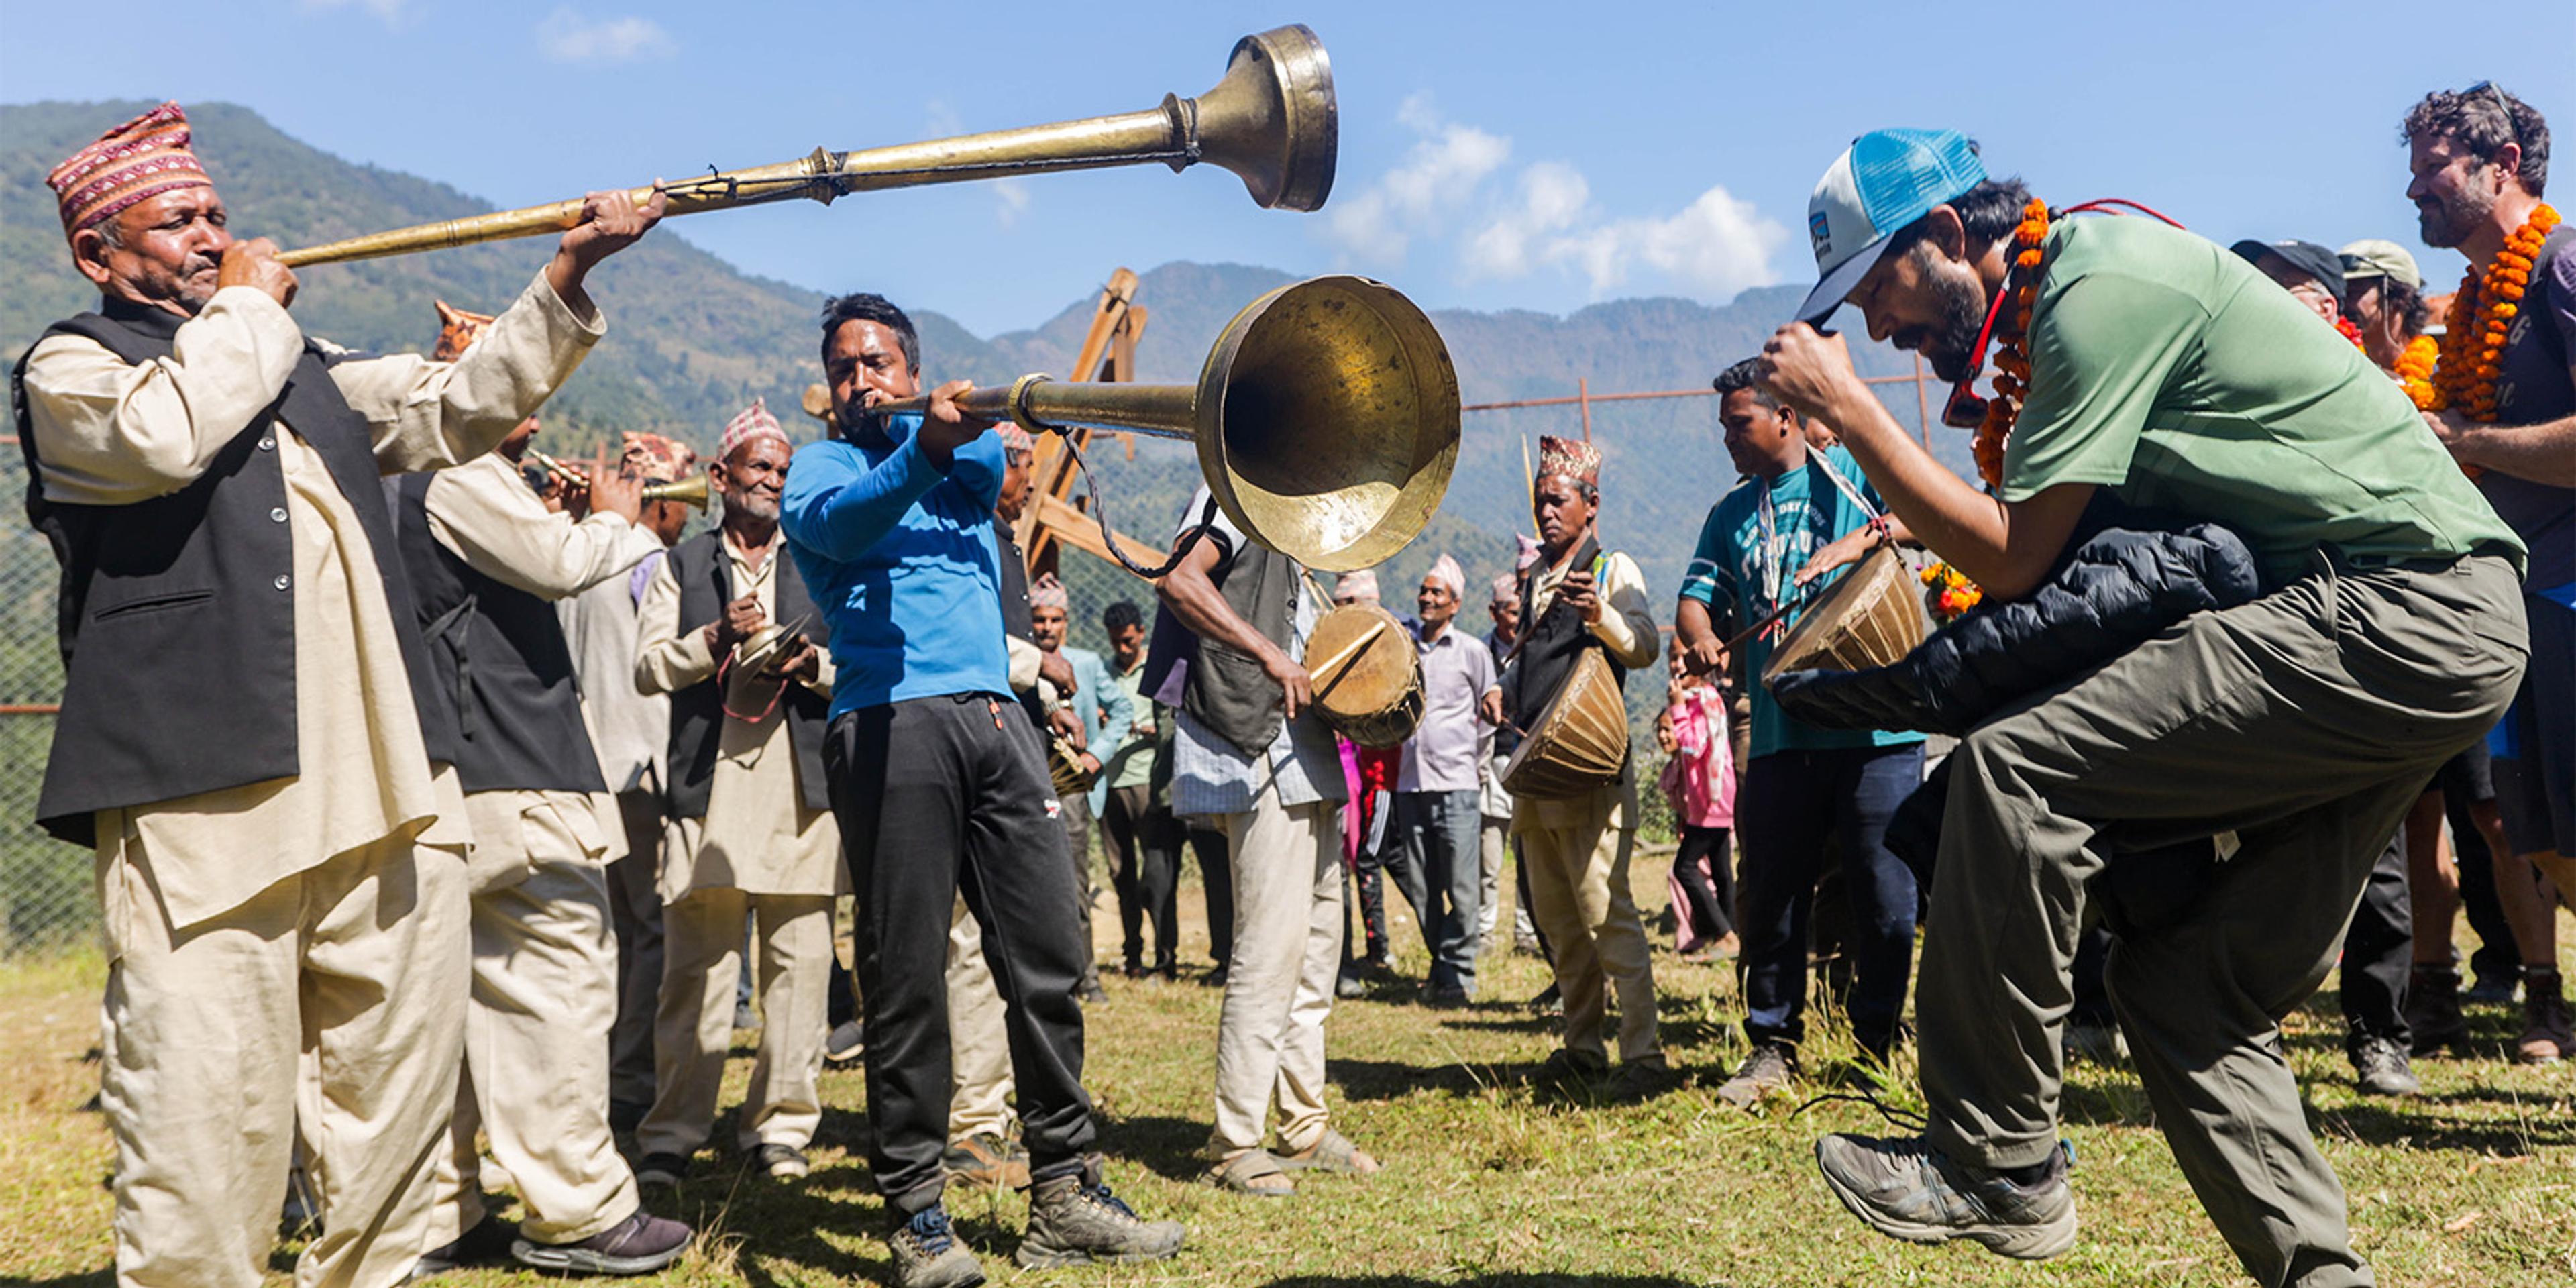 A band welcomes volunteers to Binjel, Nepal